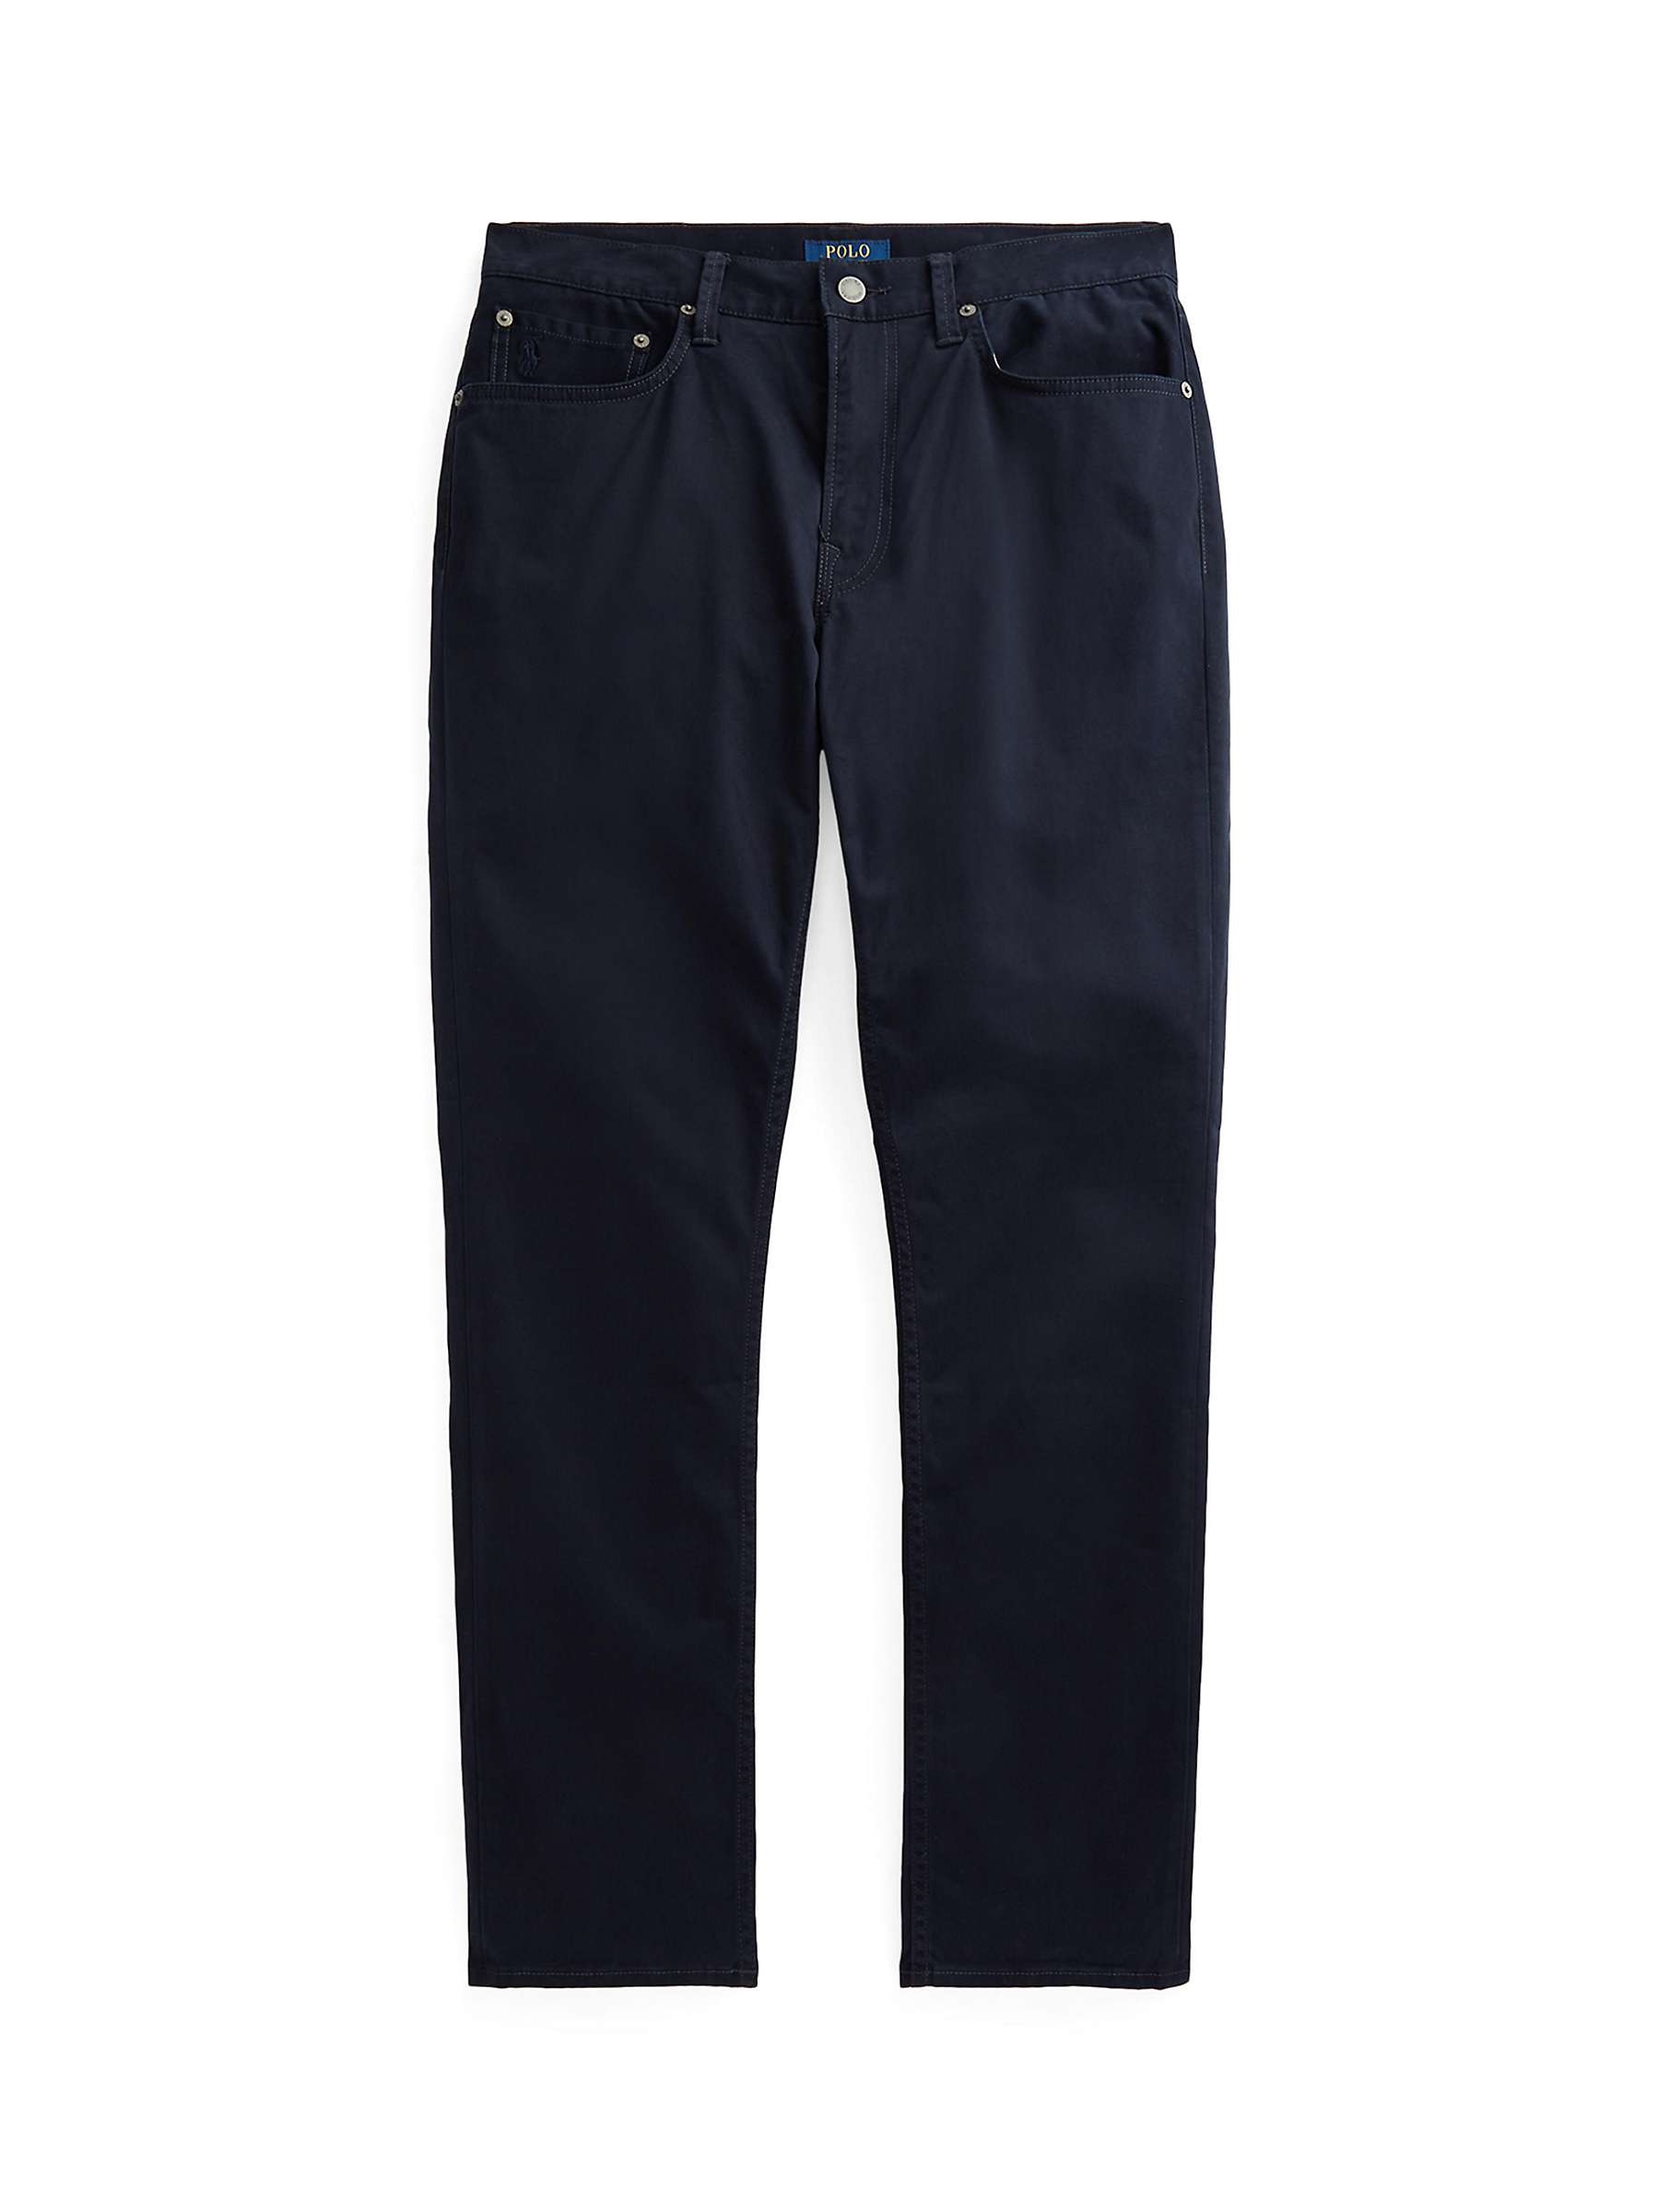 Polo Ralph Lauren Sullivan 5 Pocket Trousers, Navy at John Lewis & Partners